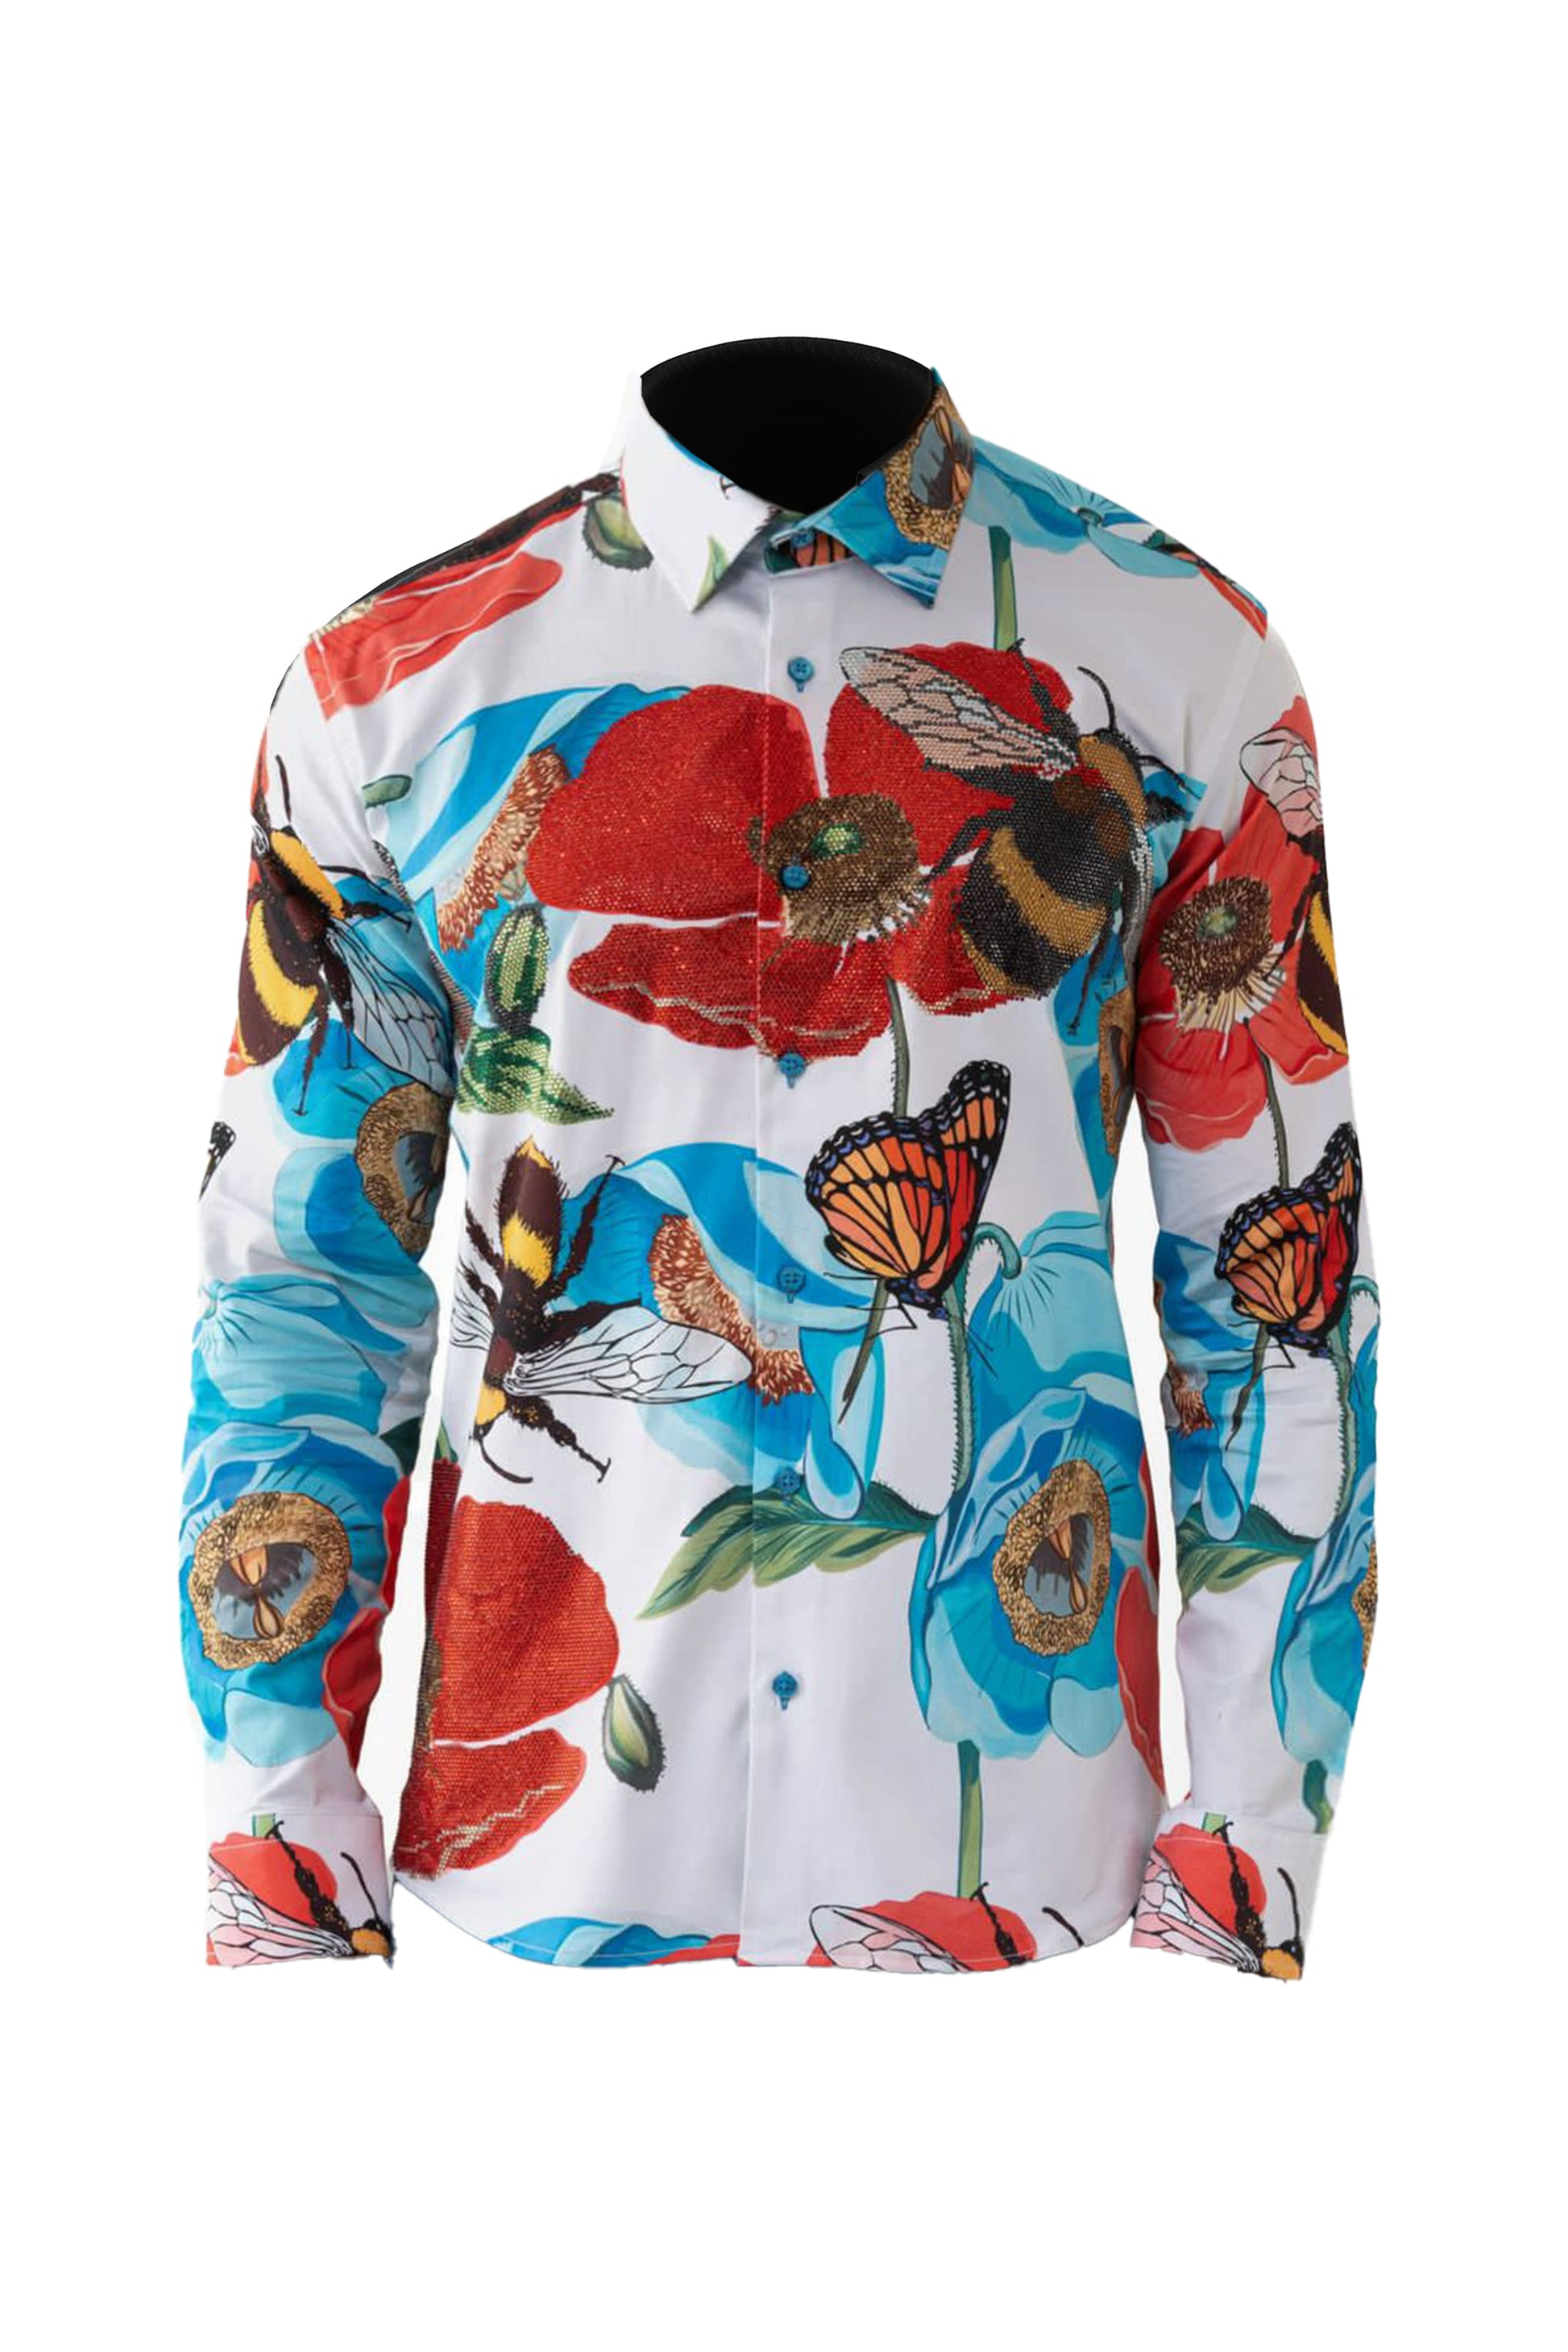 Butterfly Garden Luxe Men's Casual Shirt CASUAL SHIRT On Sale 30% Off Vercini